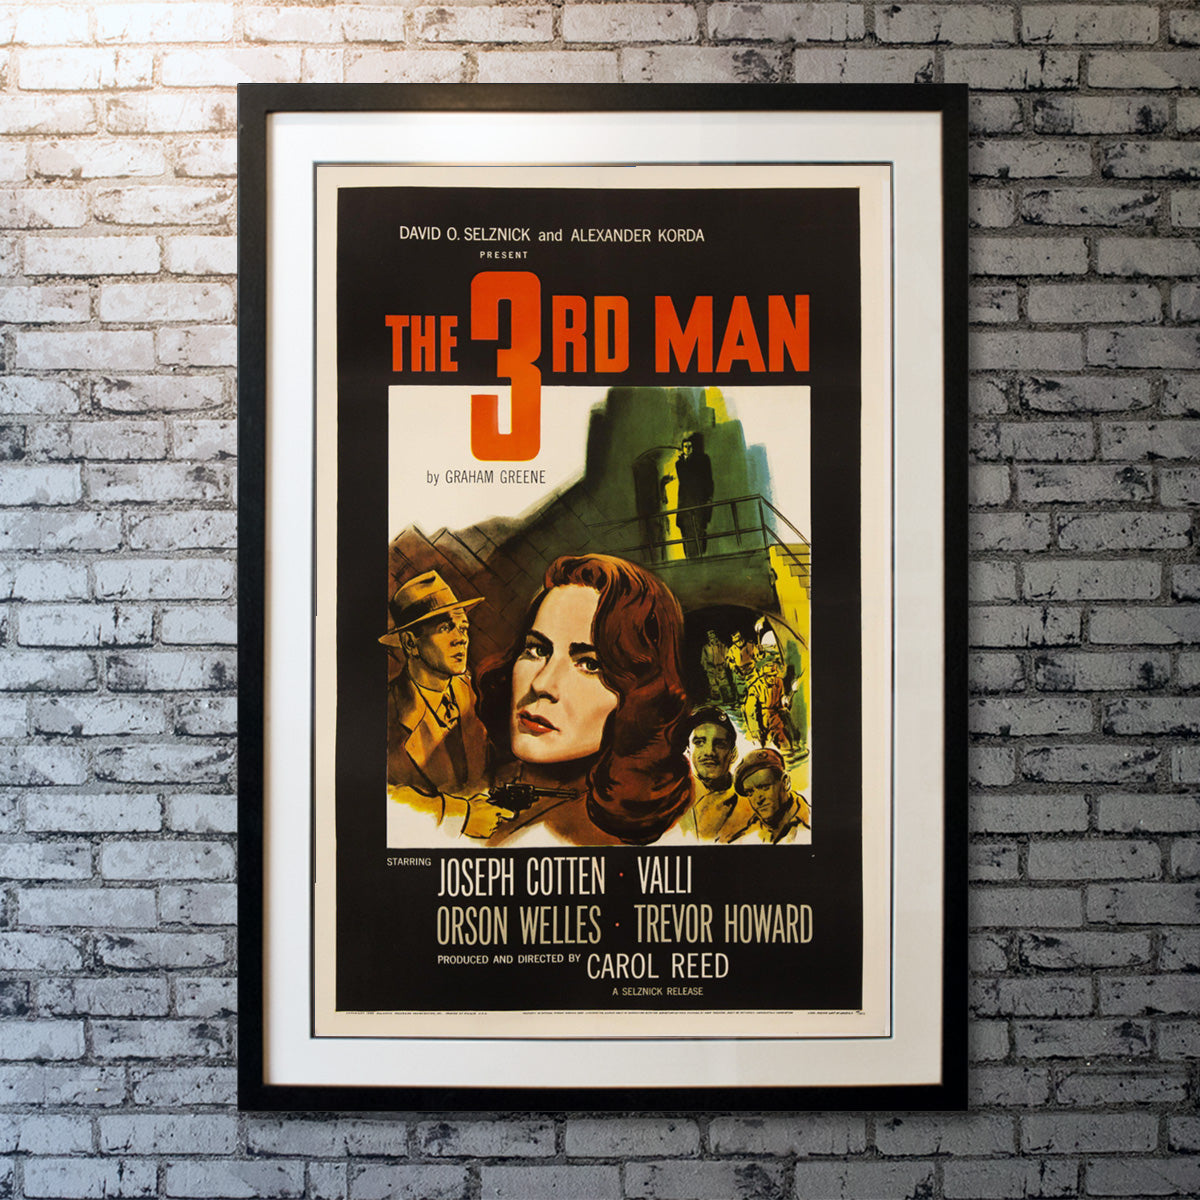 Third Man, The (1949)